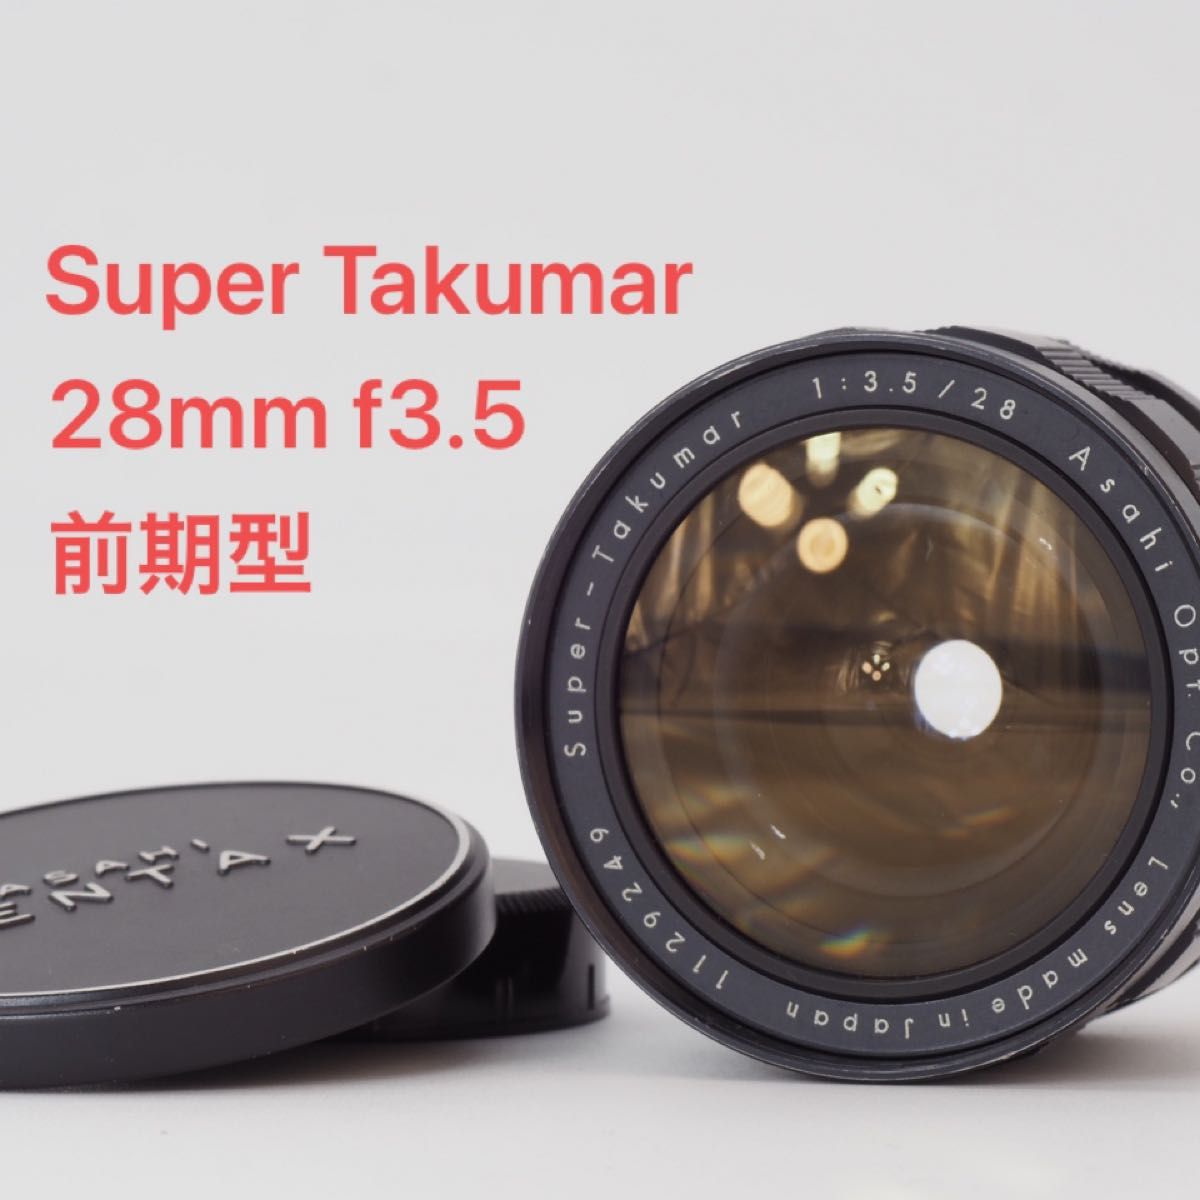 PENTAX ペンタックス Super Takumar 28mm f3.5 前期型 タクマー オールドレンズ